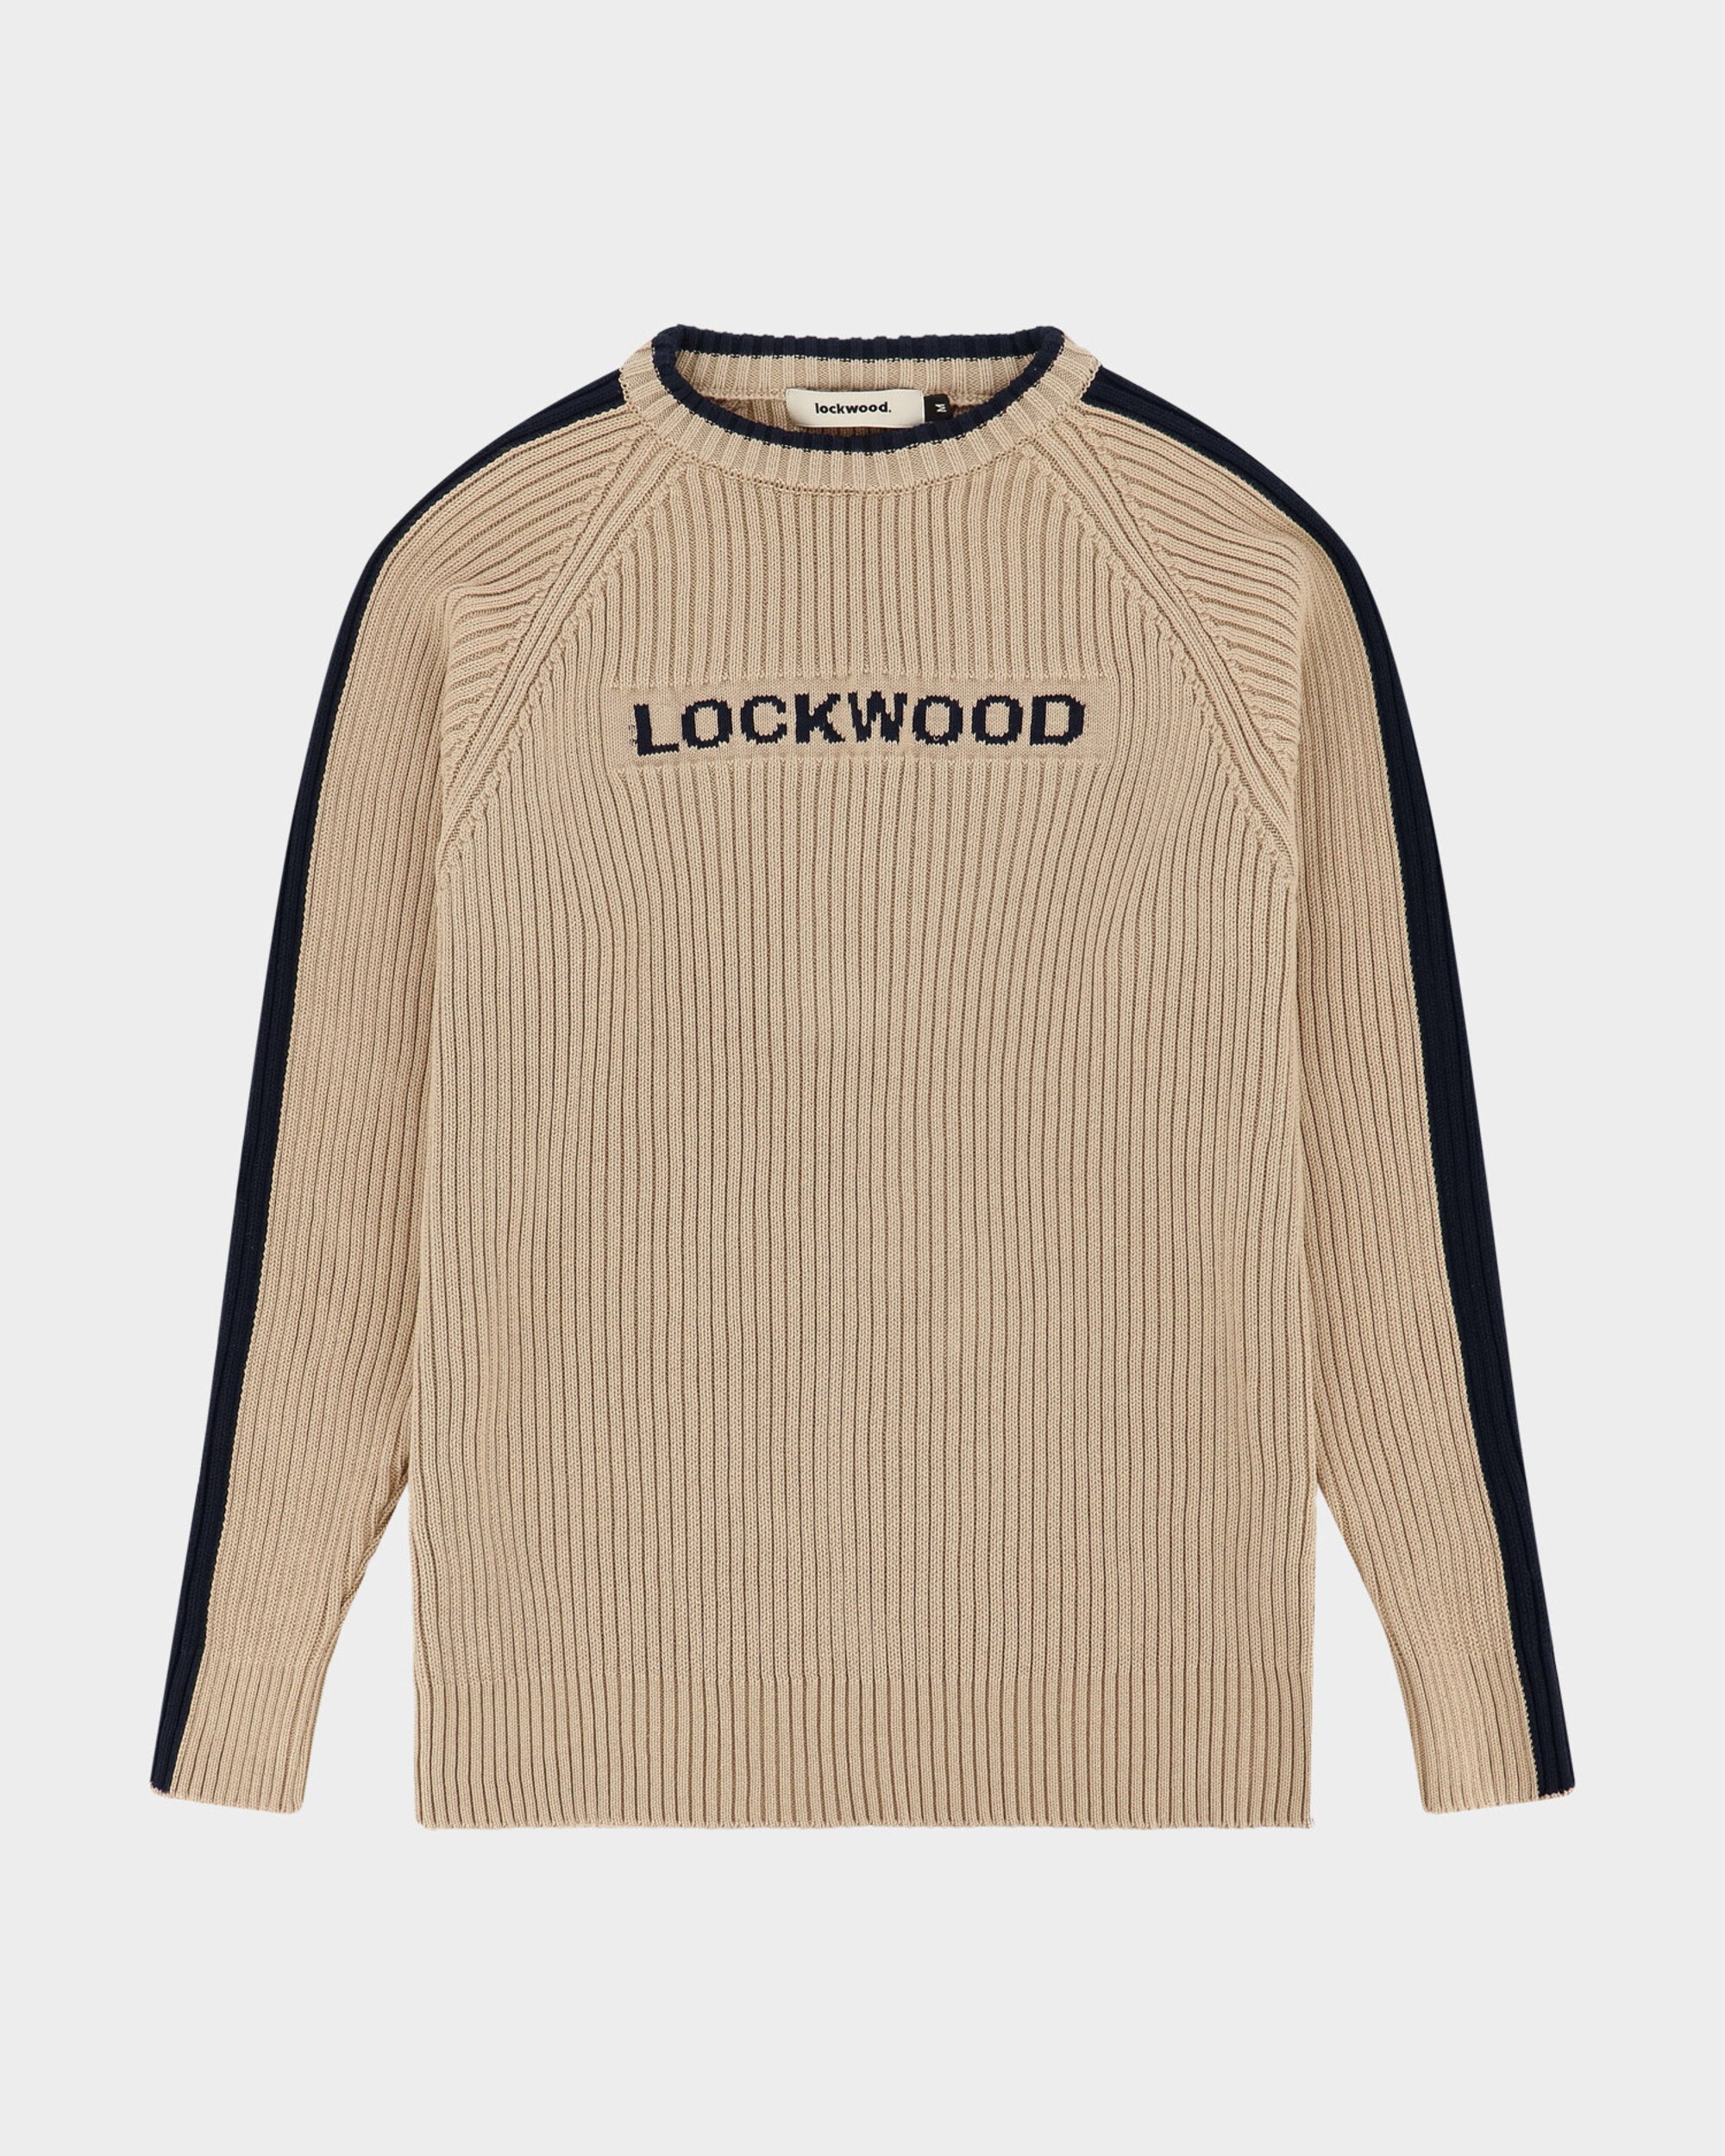 Lockwood Y2K Rib - Knit - Beige/Navy